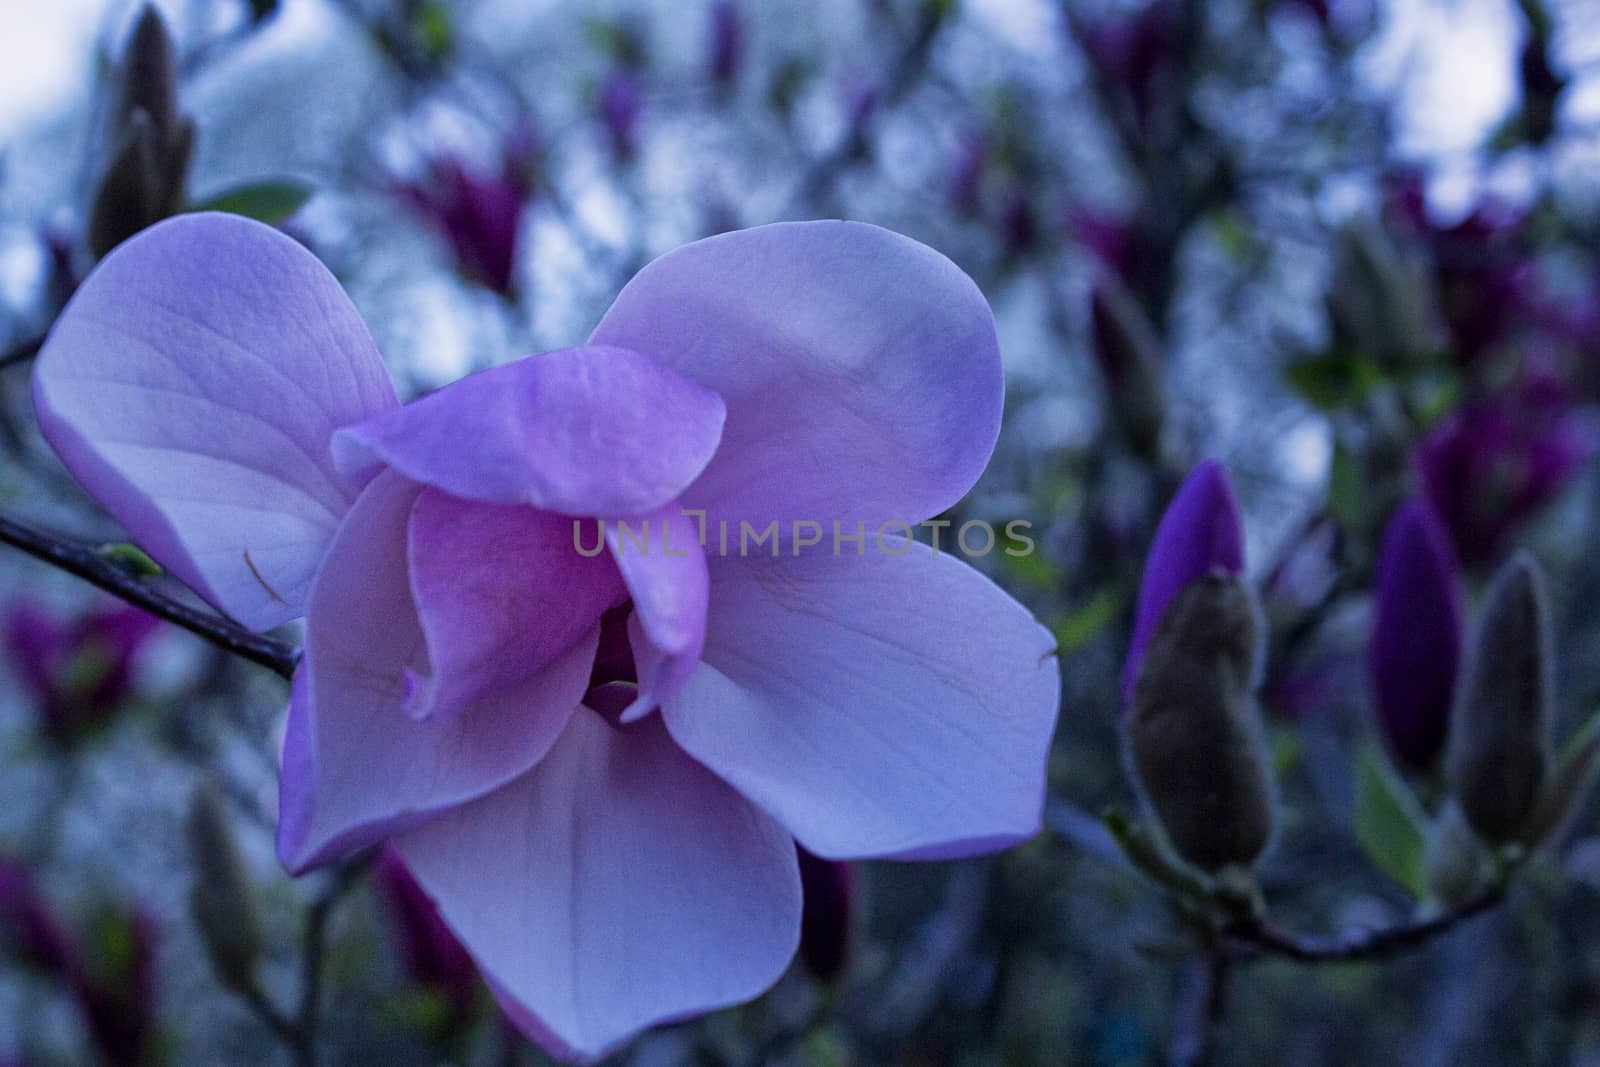 Purple magnolia flower on a tree bench, shallow depth of focus.